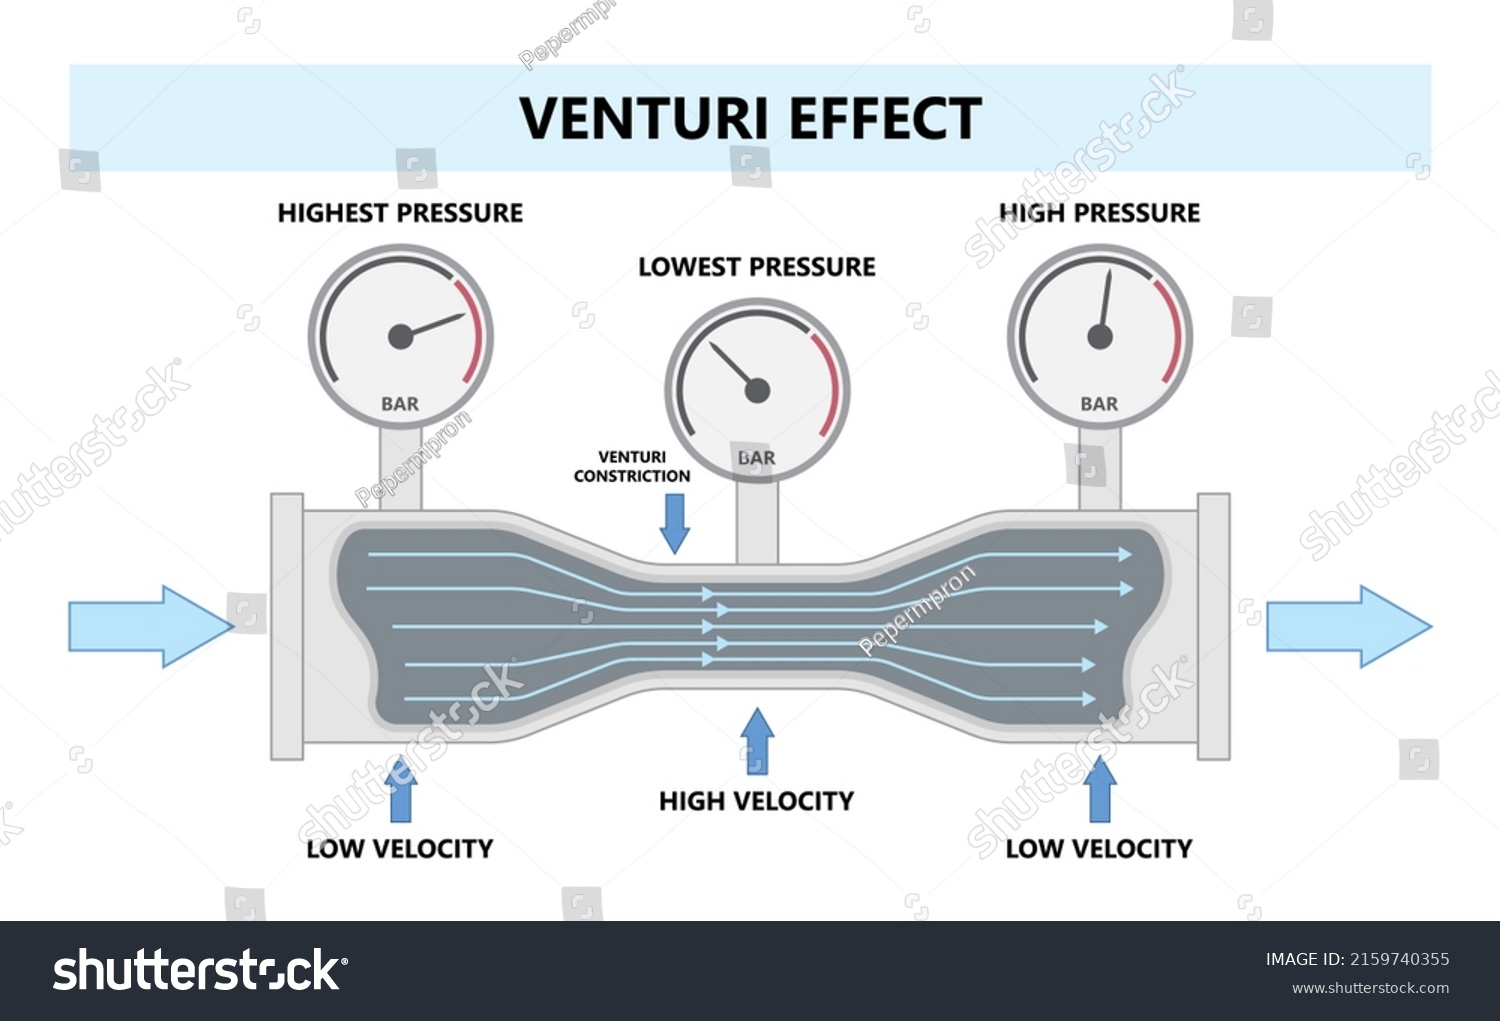 Venturi effect air flow bernoulli's principle gas law pipe rate mass tube measure scientific meter pump force airfoil lift wing manometer gauge education potential kinetic #2159740355